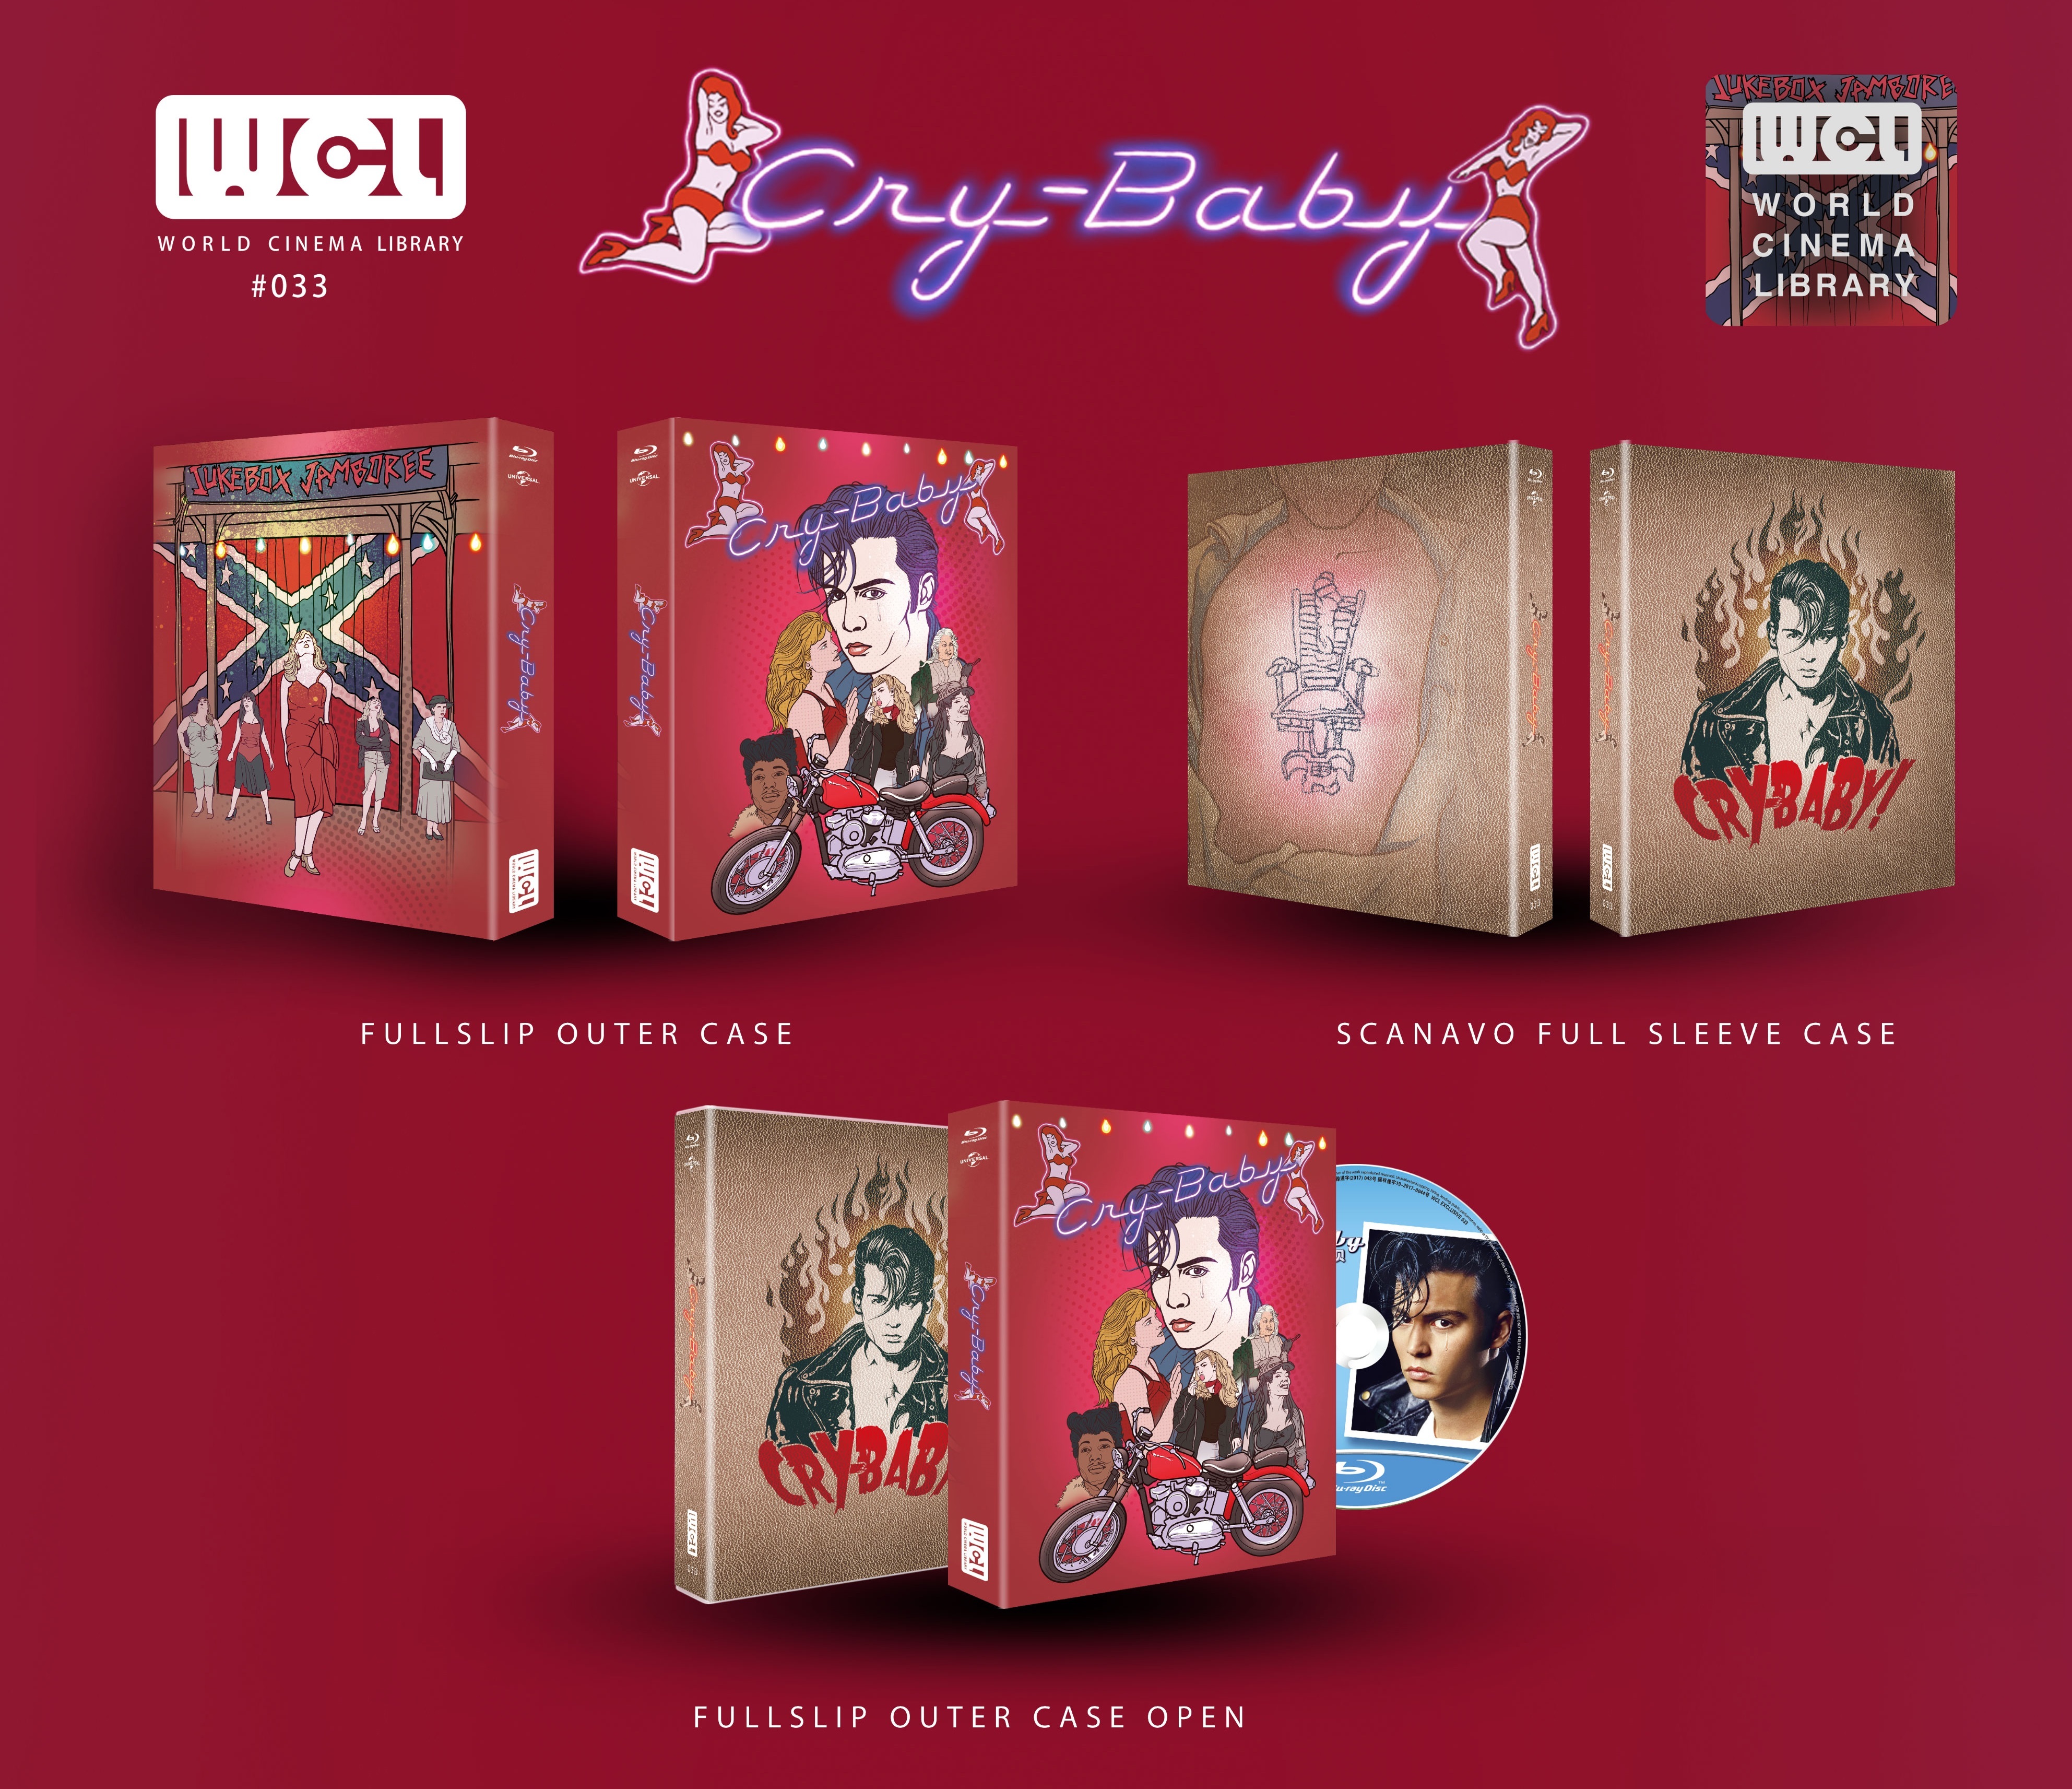 Cry-Baby Blu-ray (World Cinema Library #033 / WCL Exclusive / 哭泣宝贝) (China)